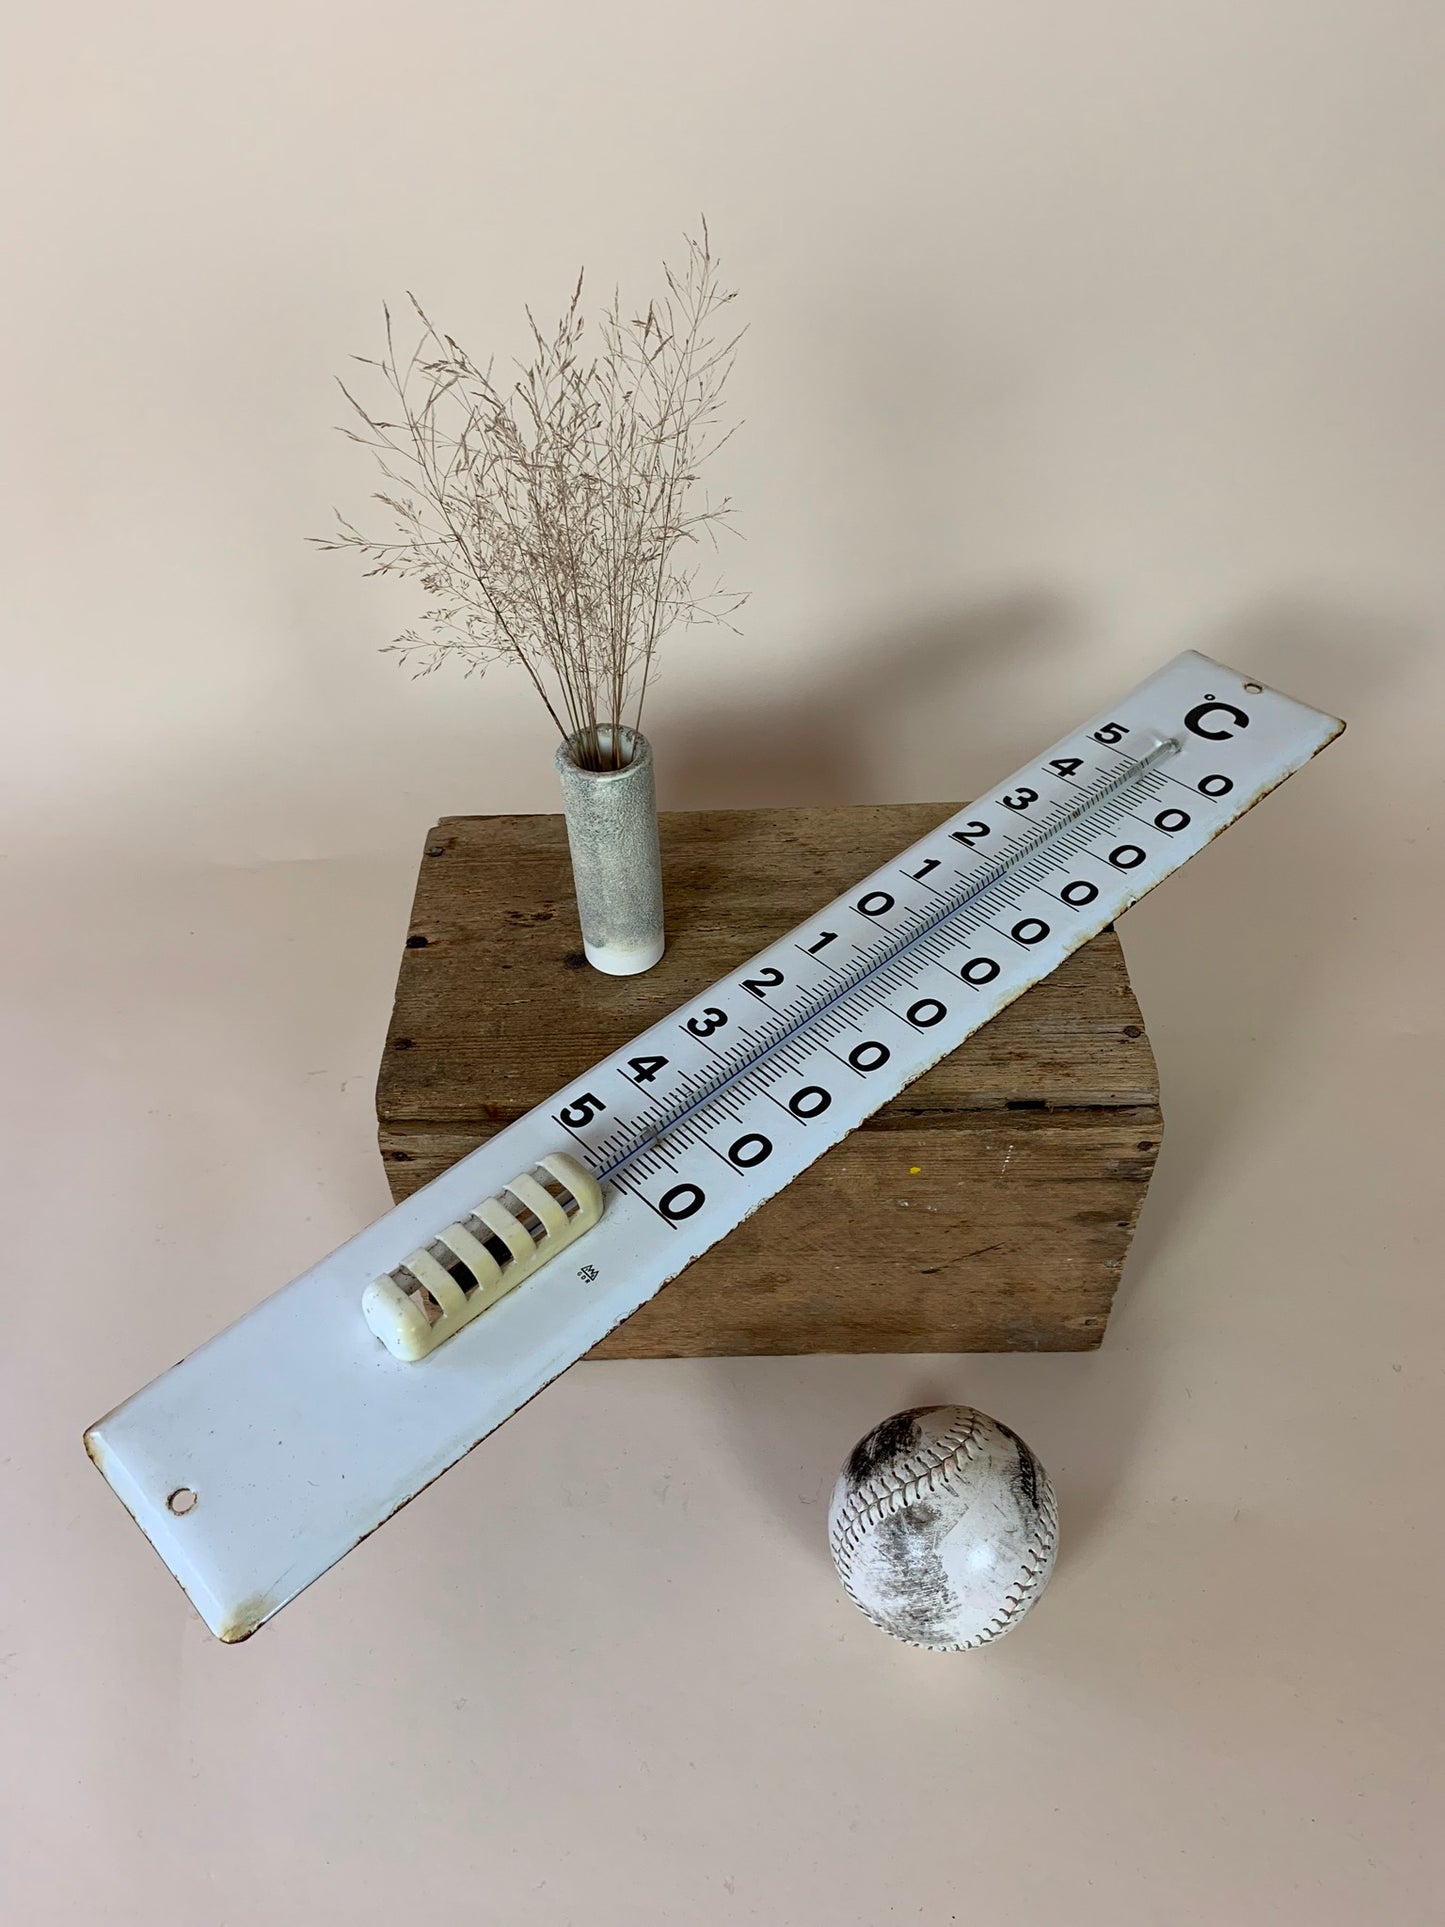 Schönes altes Emaille-Thermometer